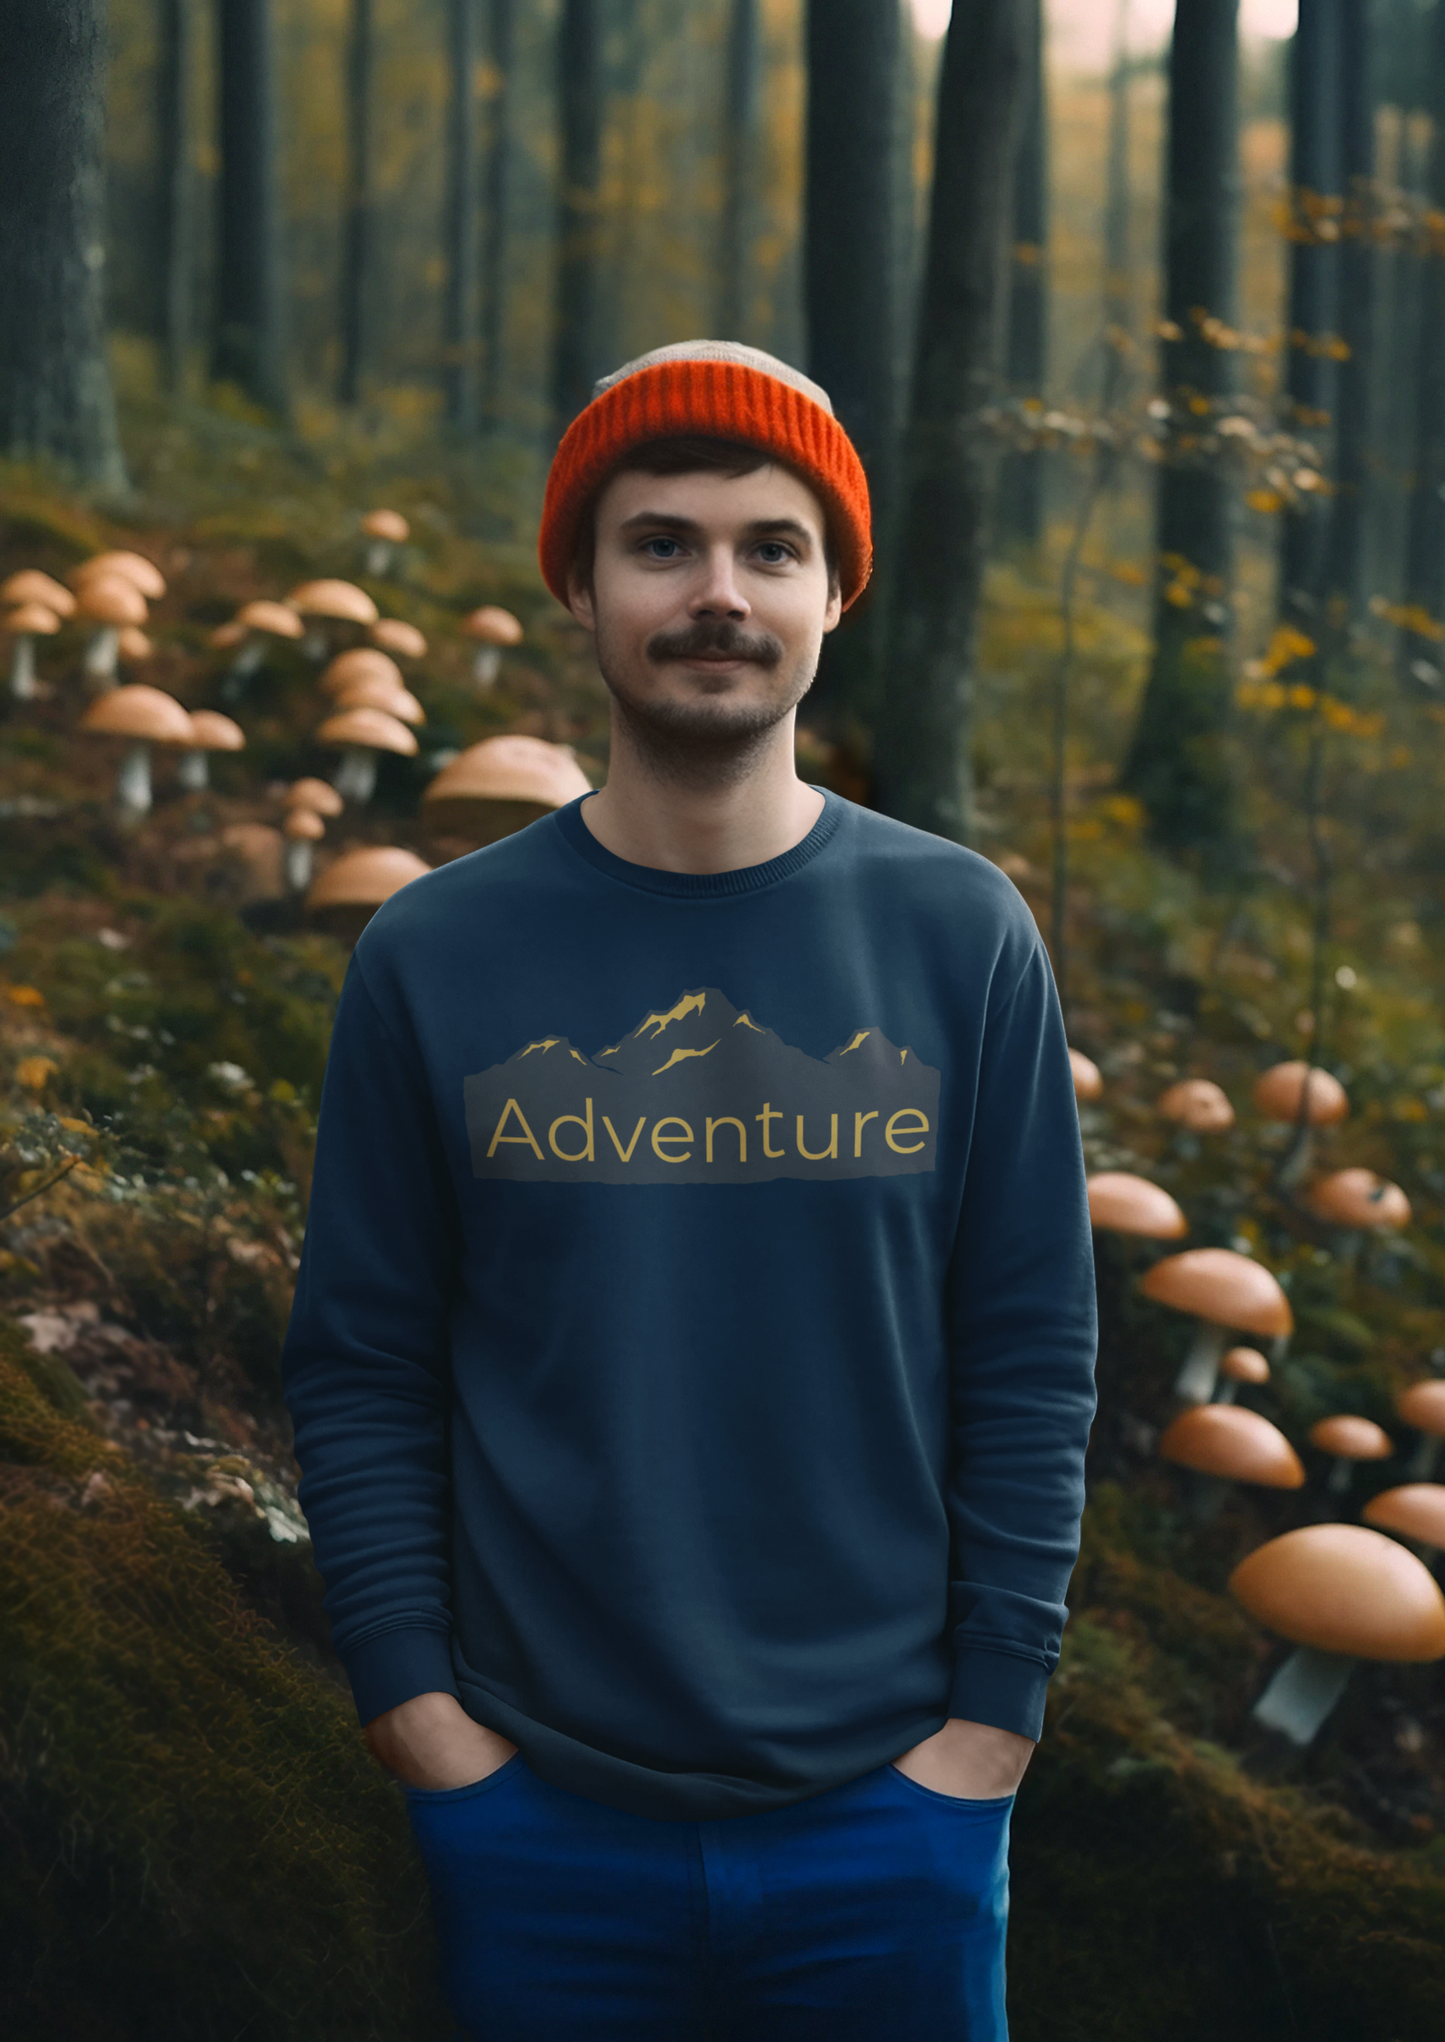 Bilkool Adventure Cotton Sweatshirt